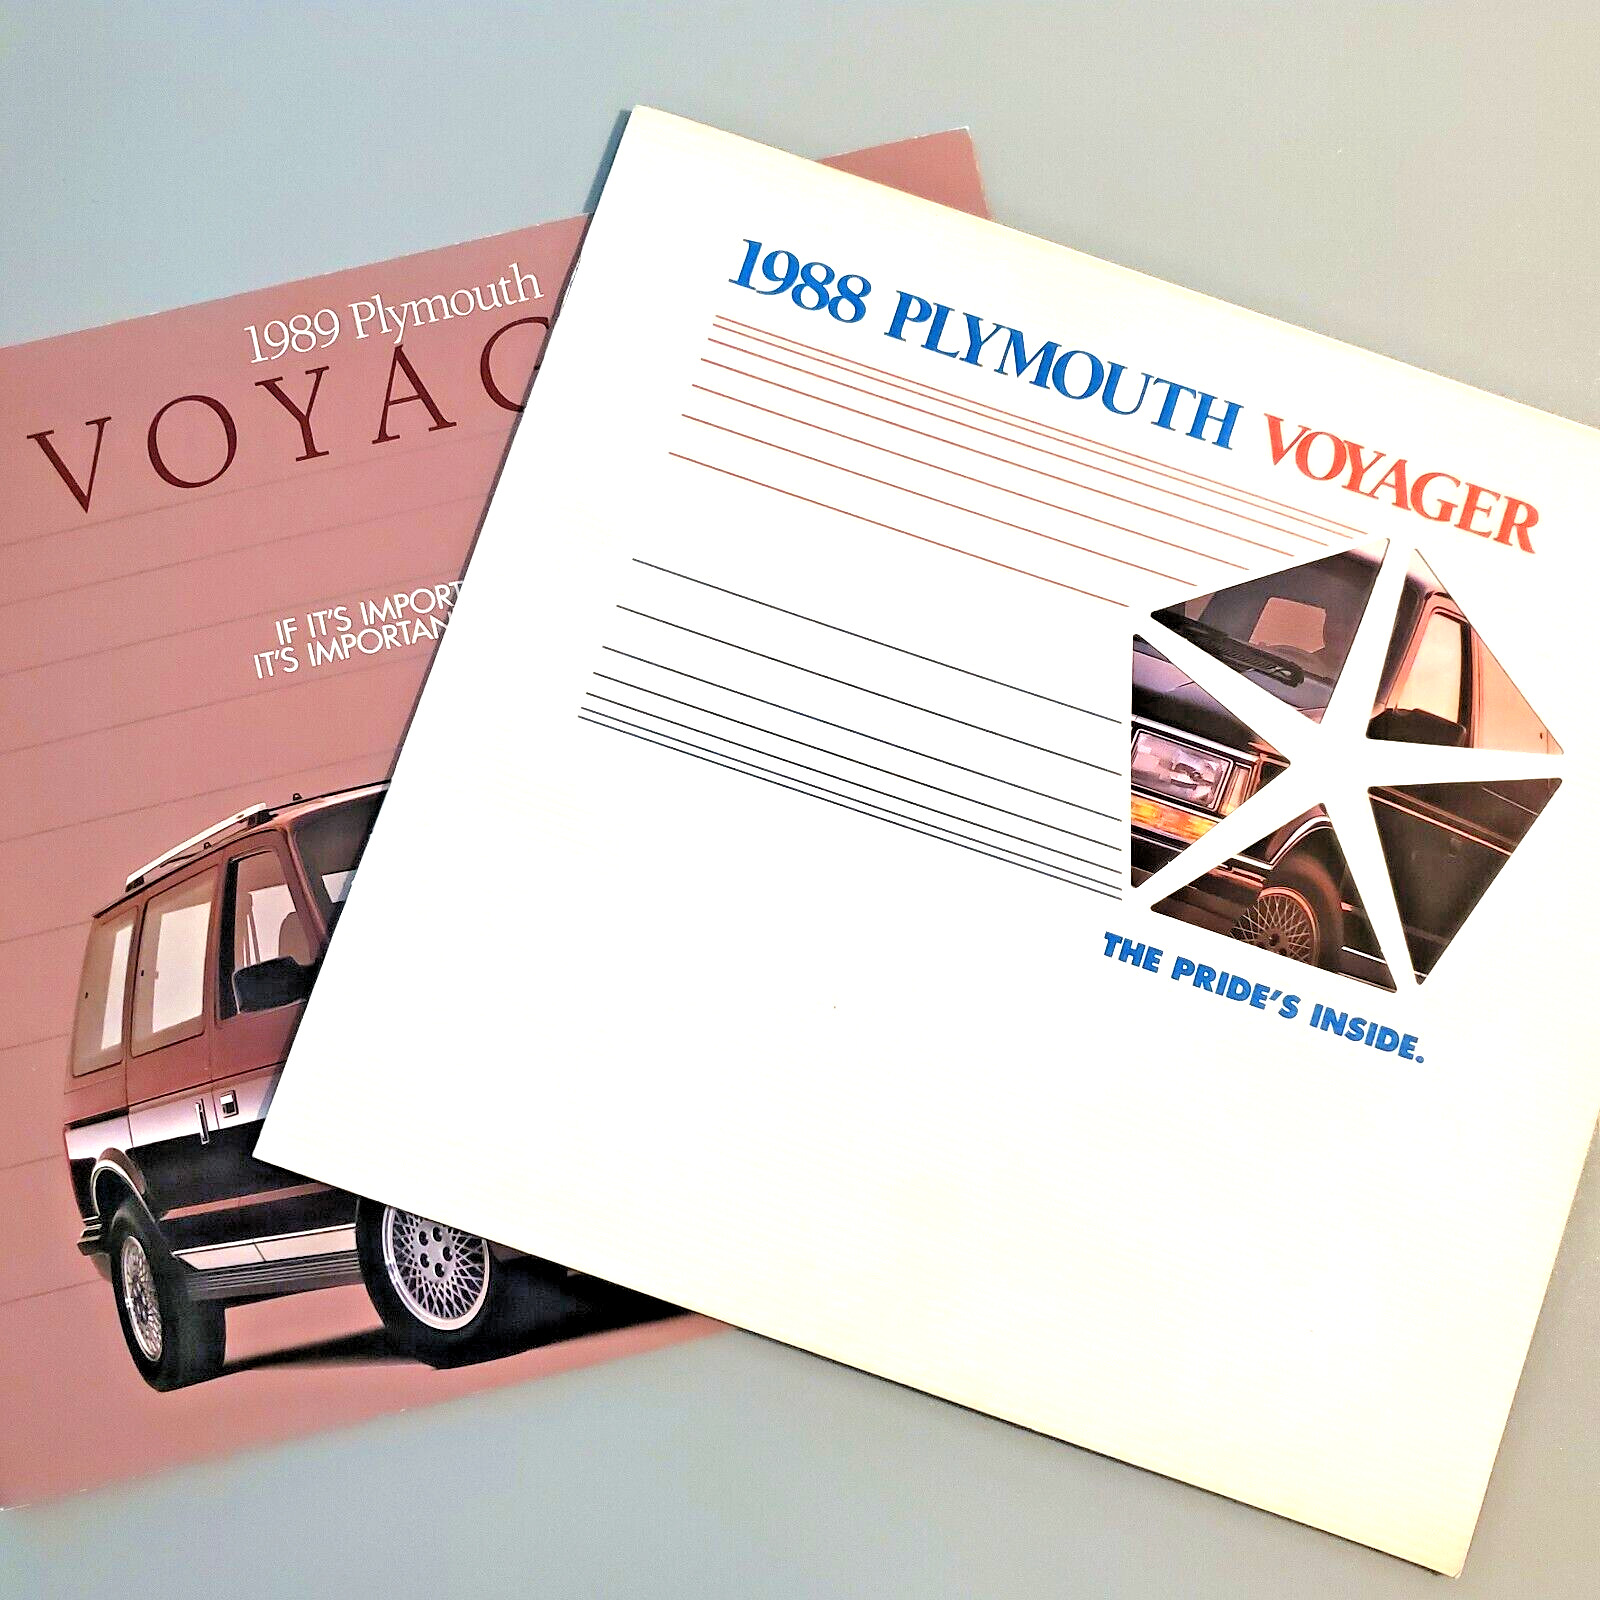 1988 and 1989 Plymouth Voyager Vintage Original Dealer Sales Brochure Full Color